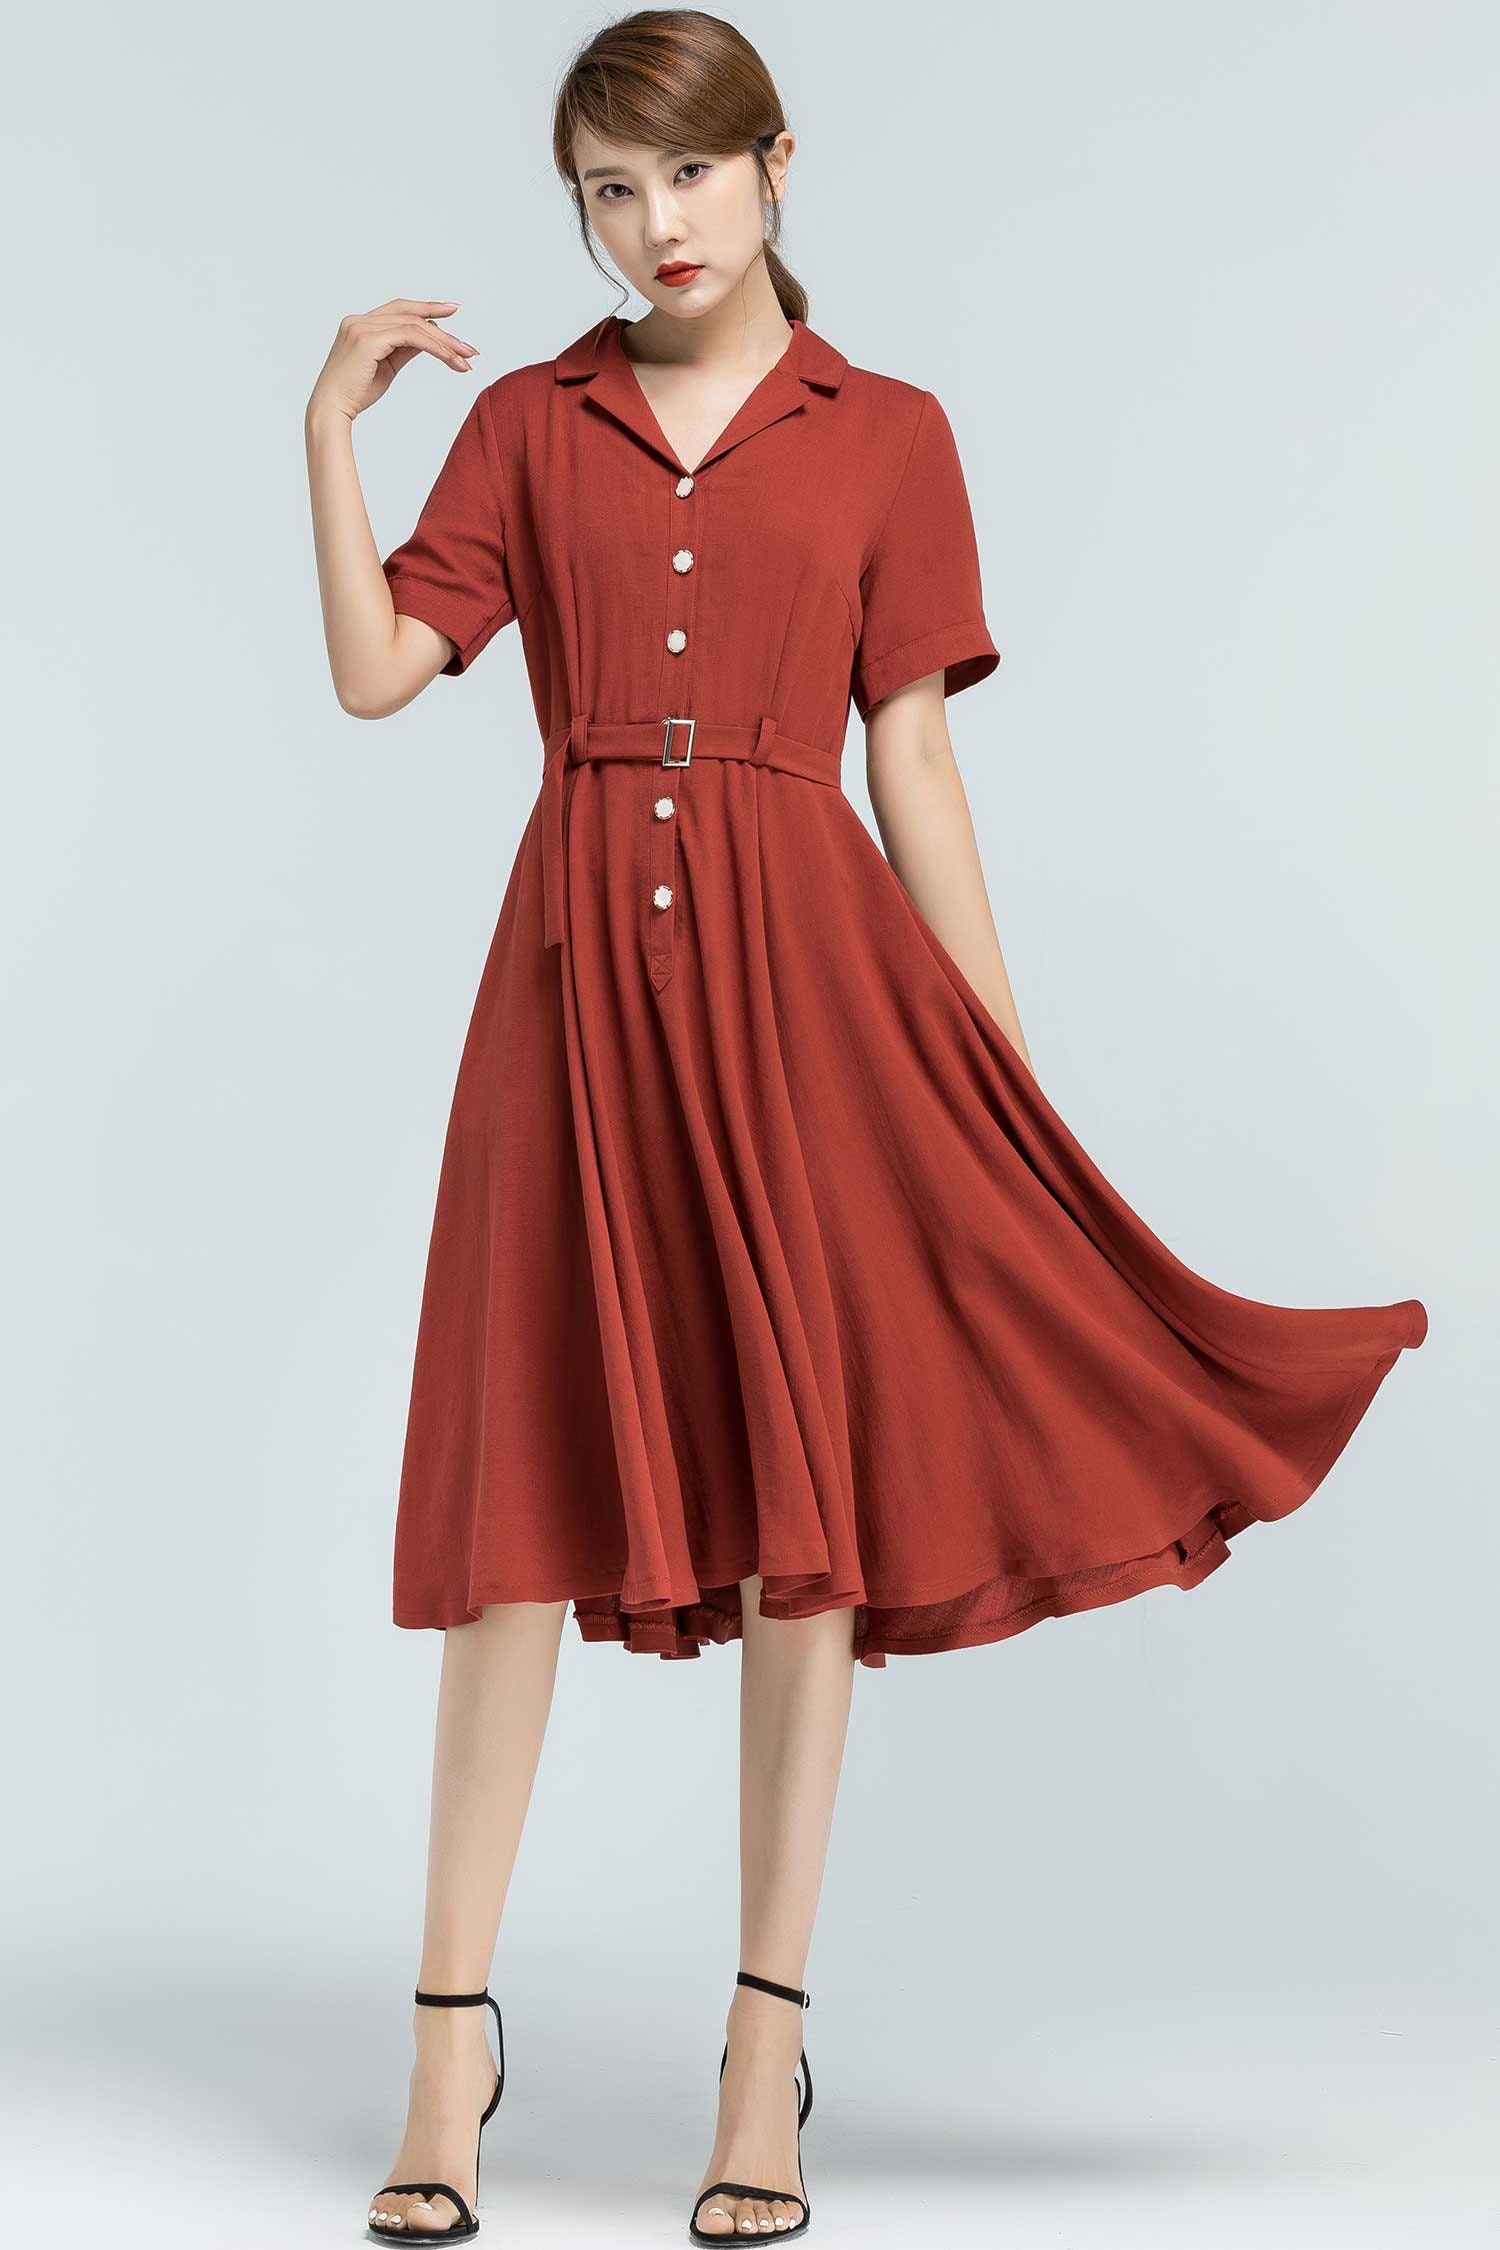 Short sleeve Shirtwaist dress with full skirt and pockets | Etsy